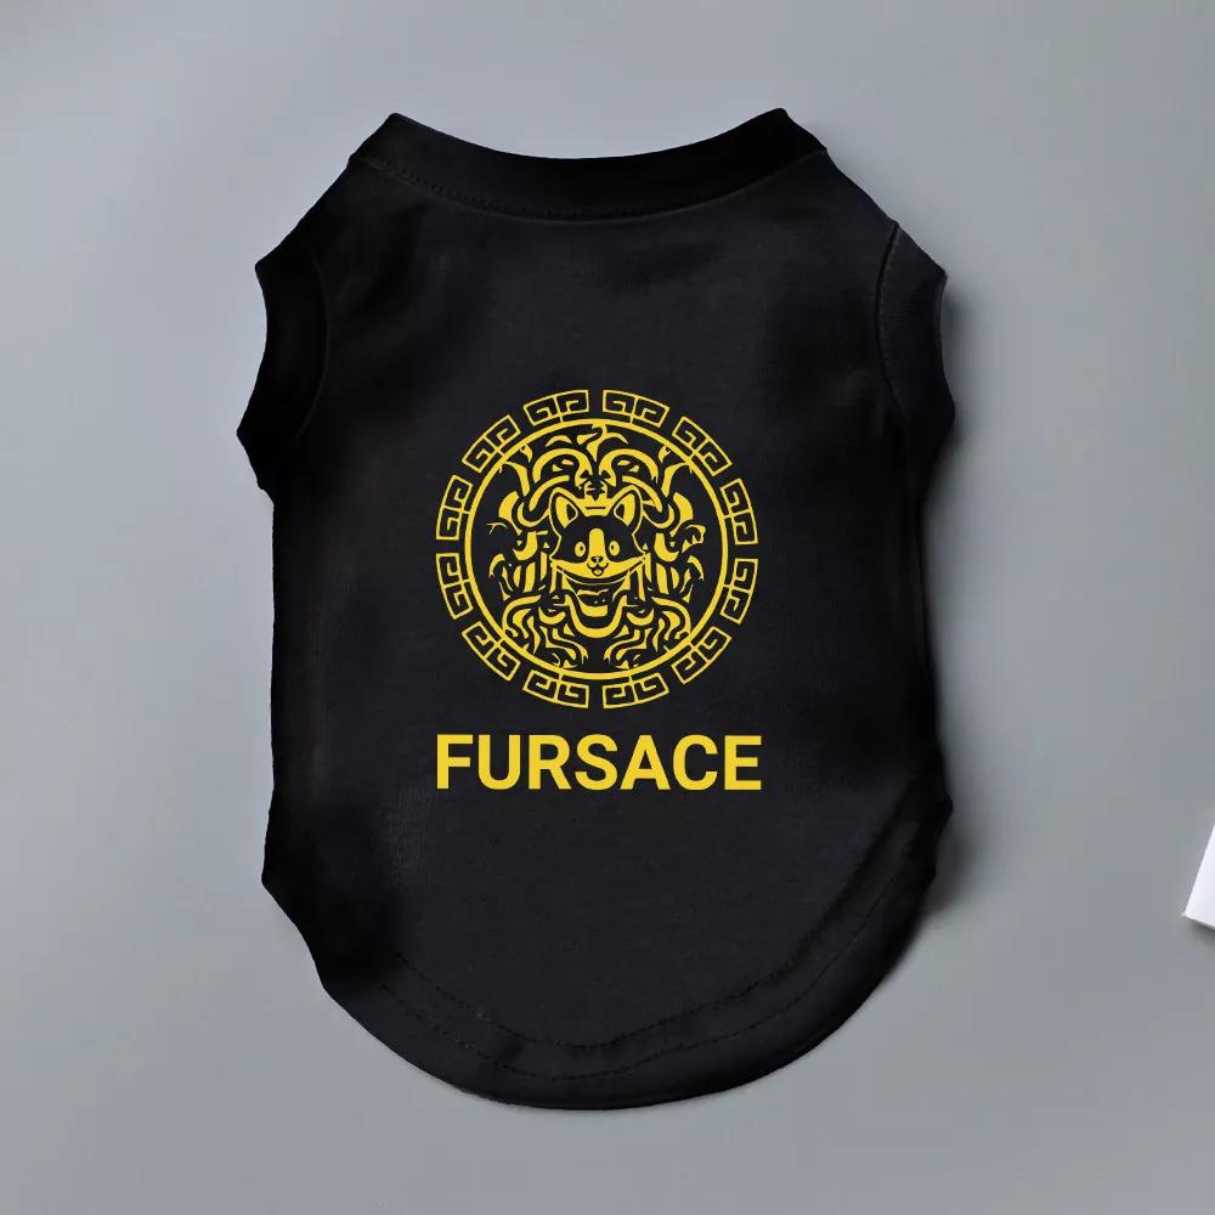 Fursace Dog Tshirt, singlet, sleeveless, clothing comes in black. Grey background